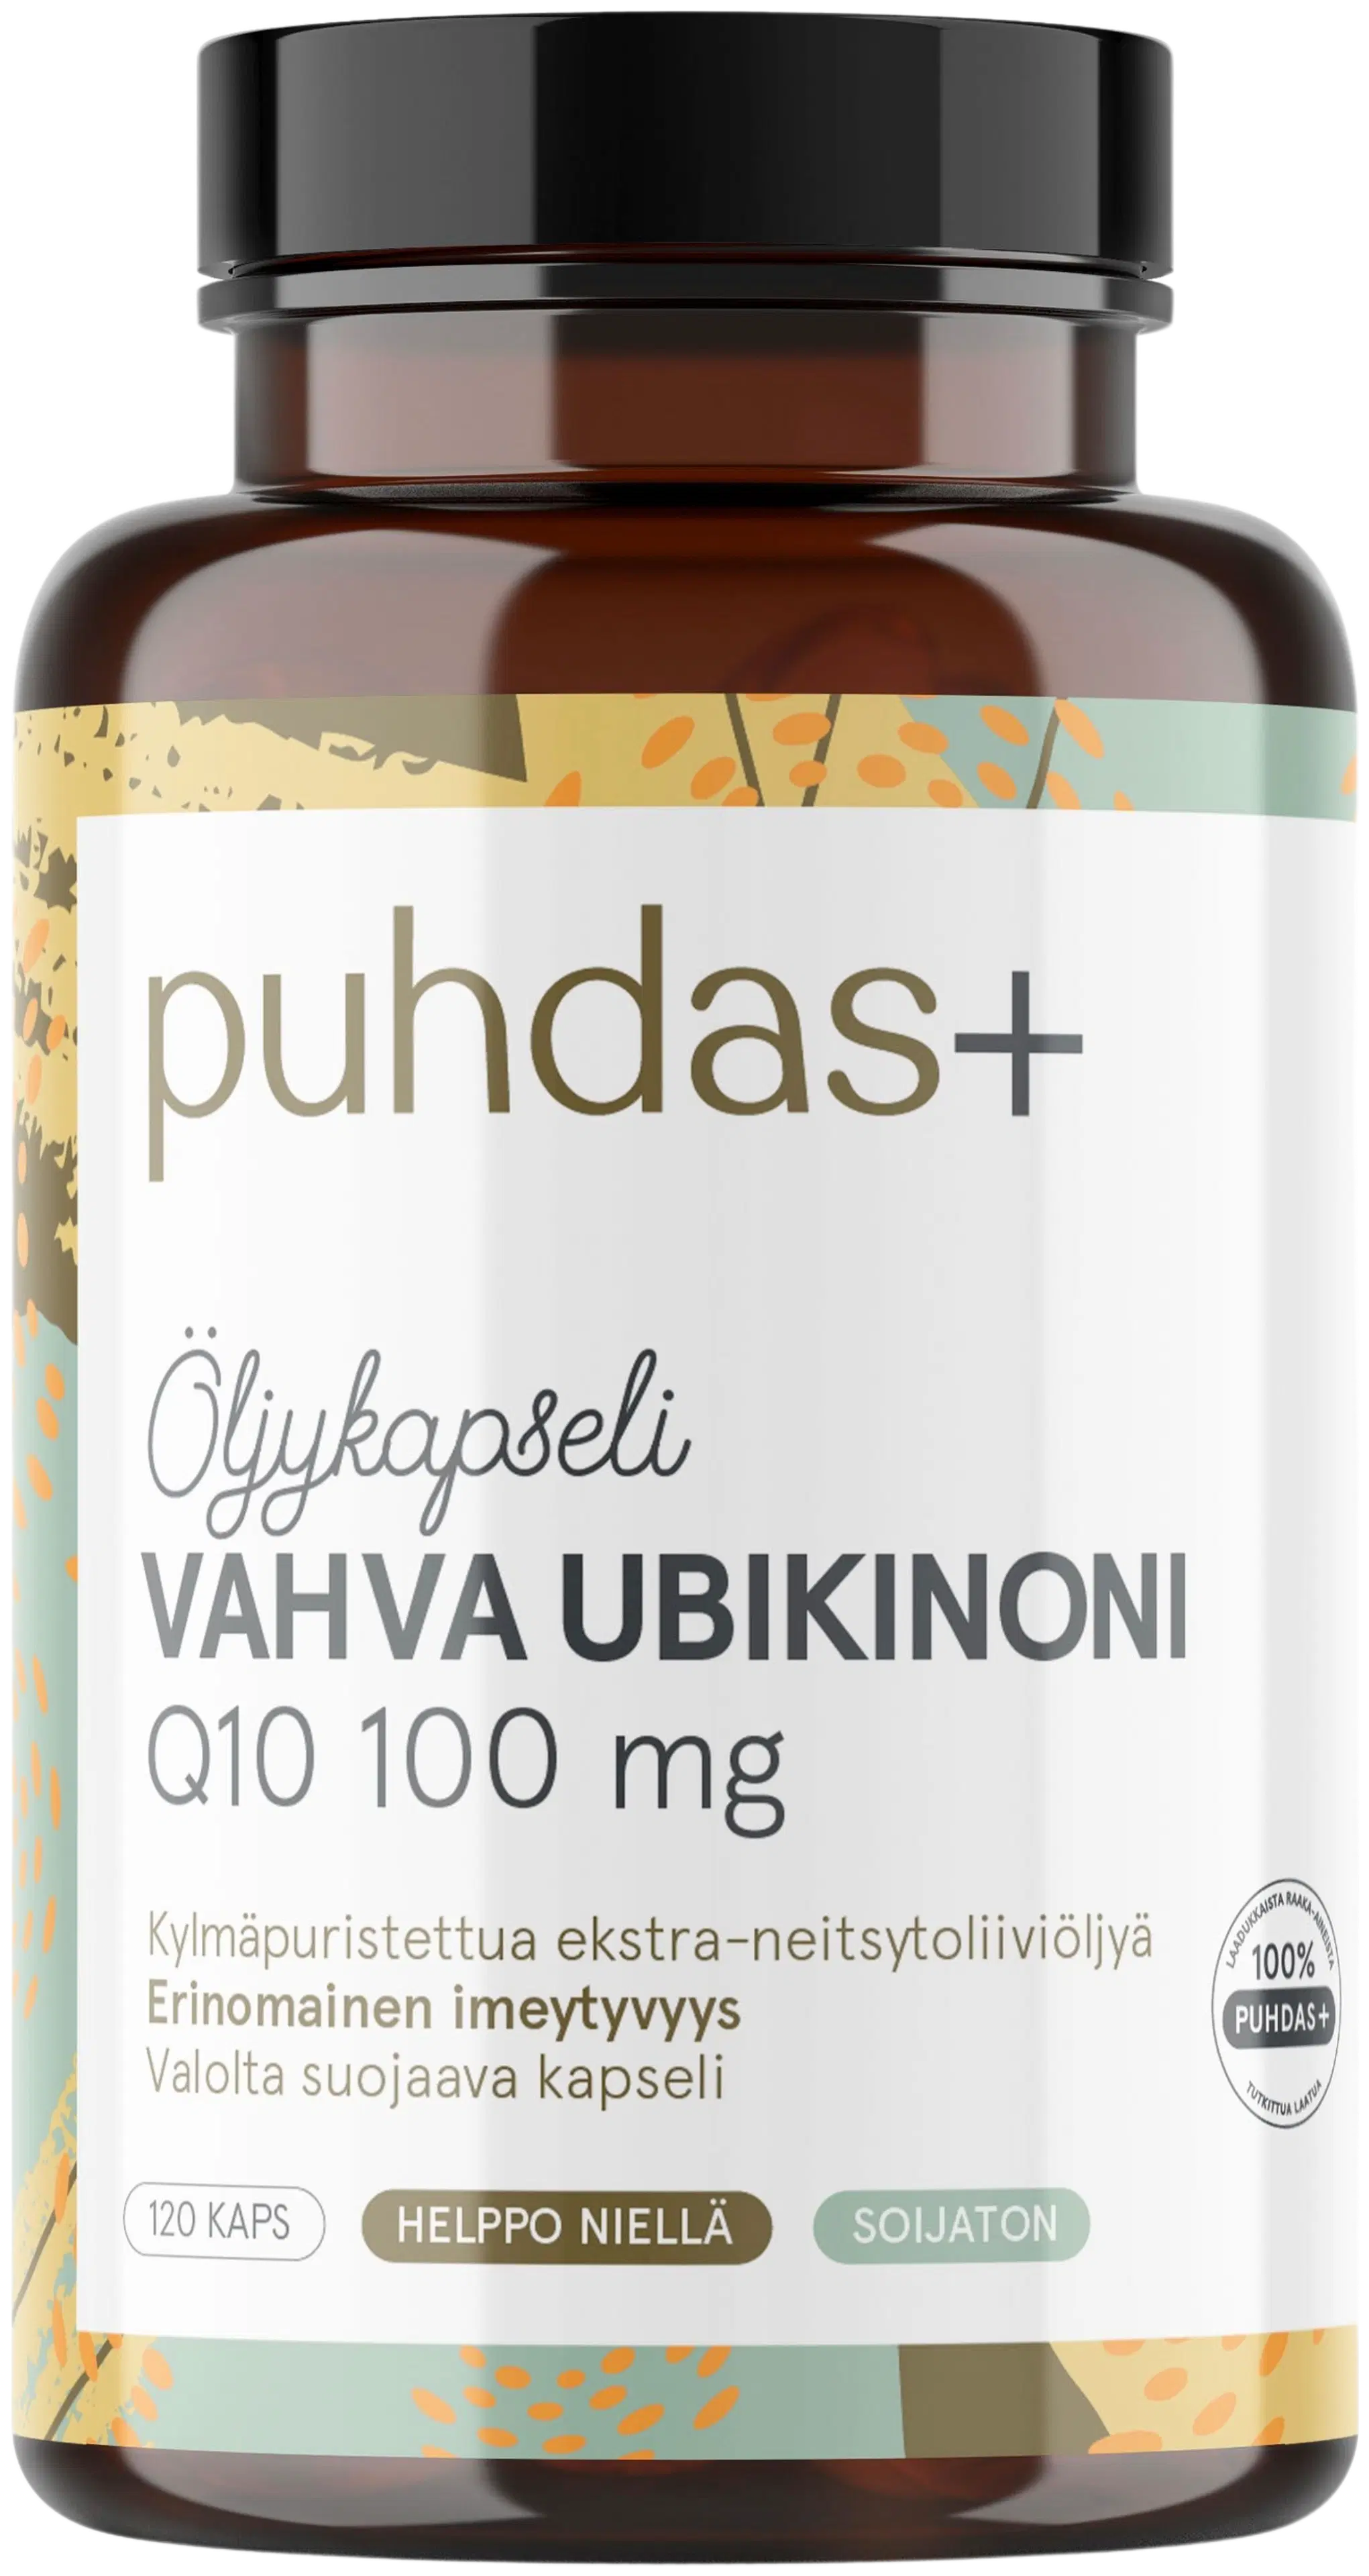 Puhdas+ Vahva Ubikinoni Q10 100 mg Öljykapseli 120 kaps